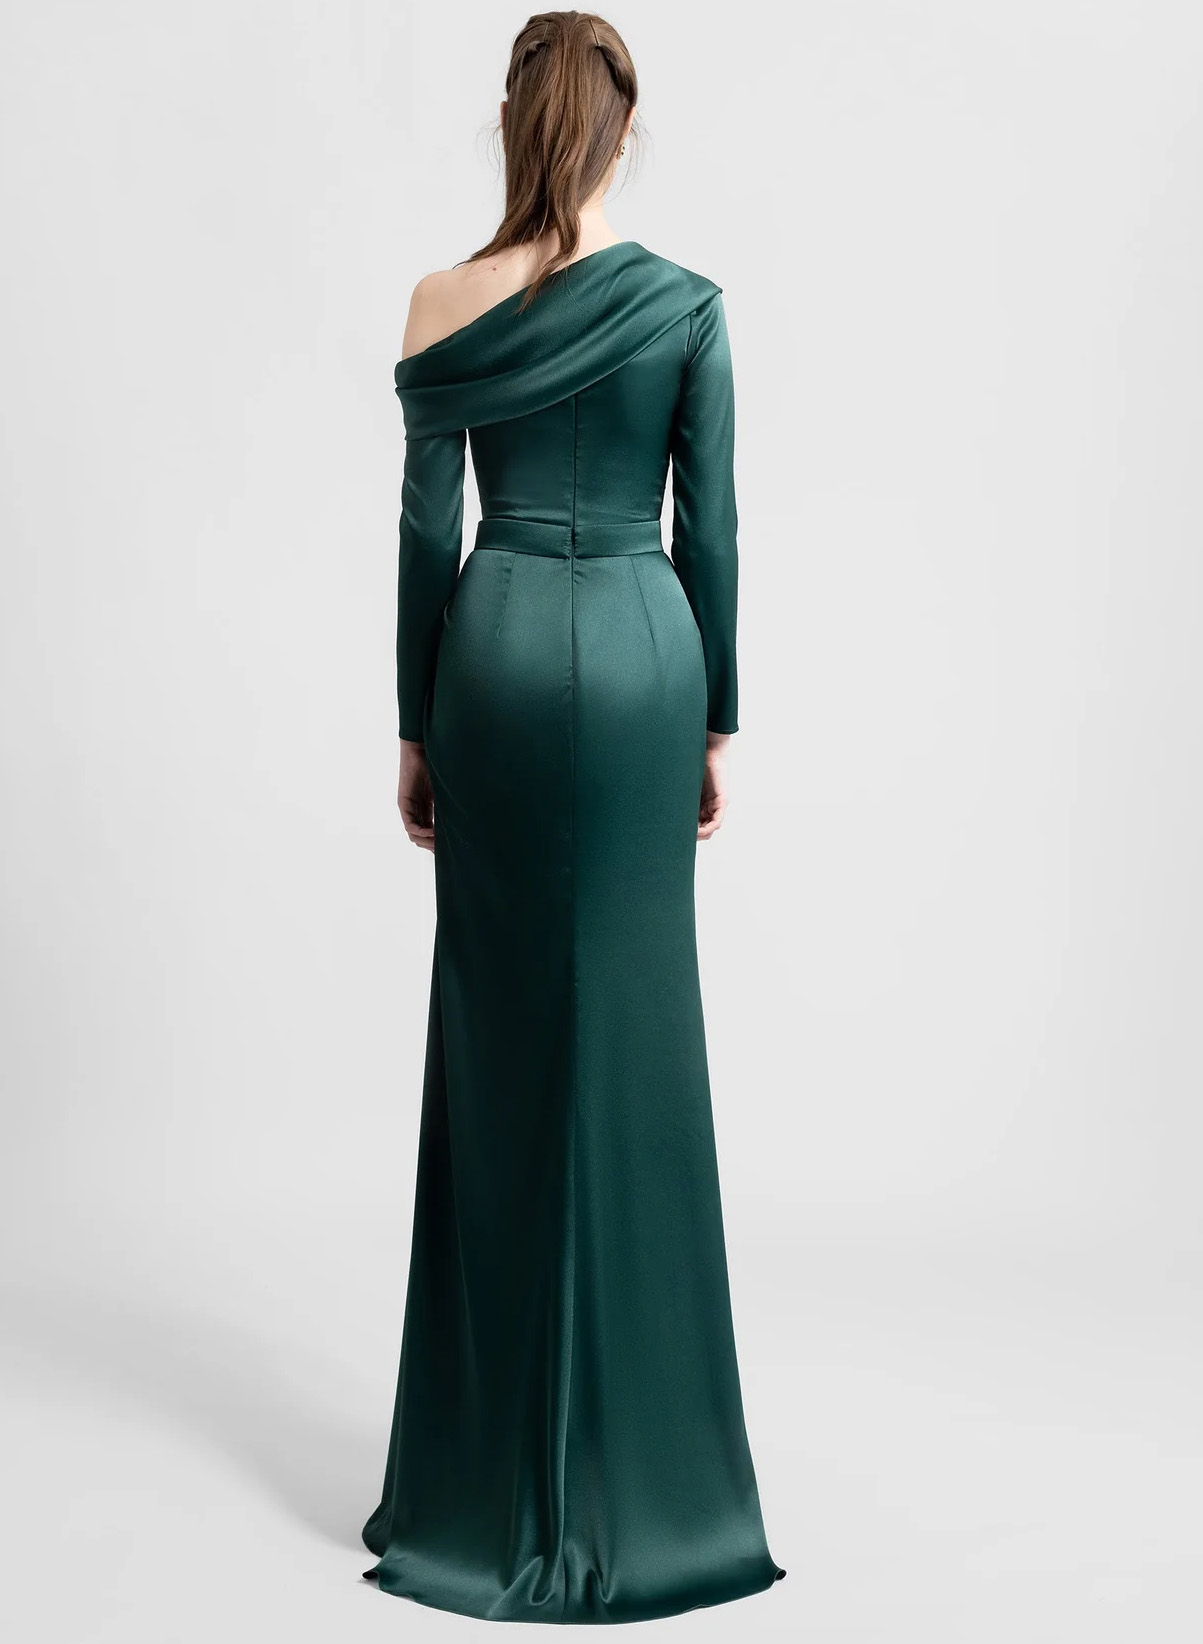 Elegant Long Sleeves Green Satin Mother Of The Bride Dresses With Cold Shoulder